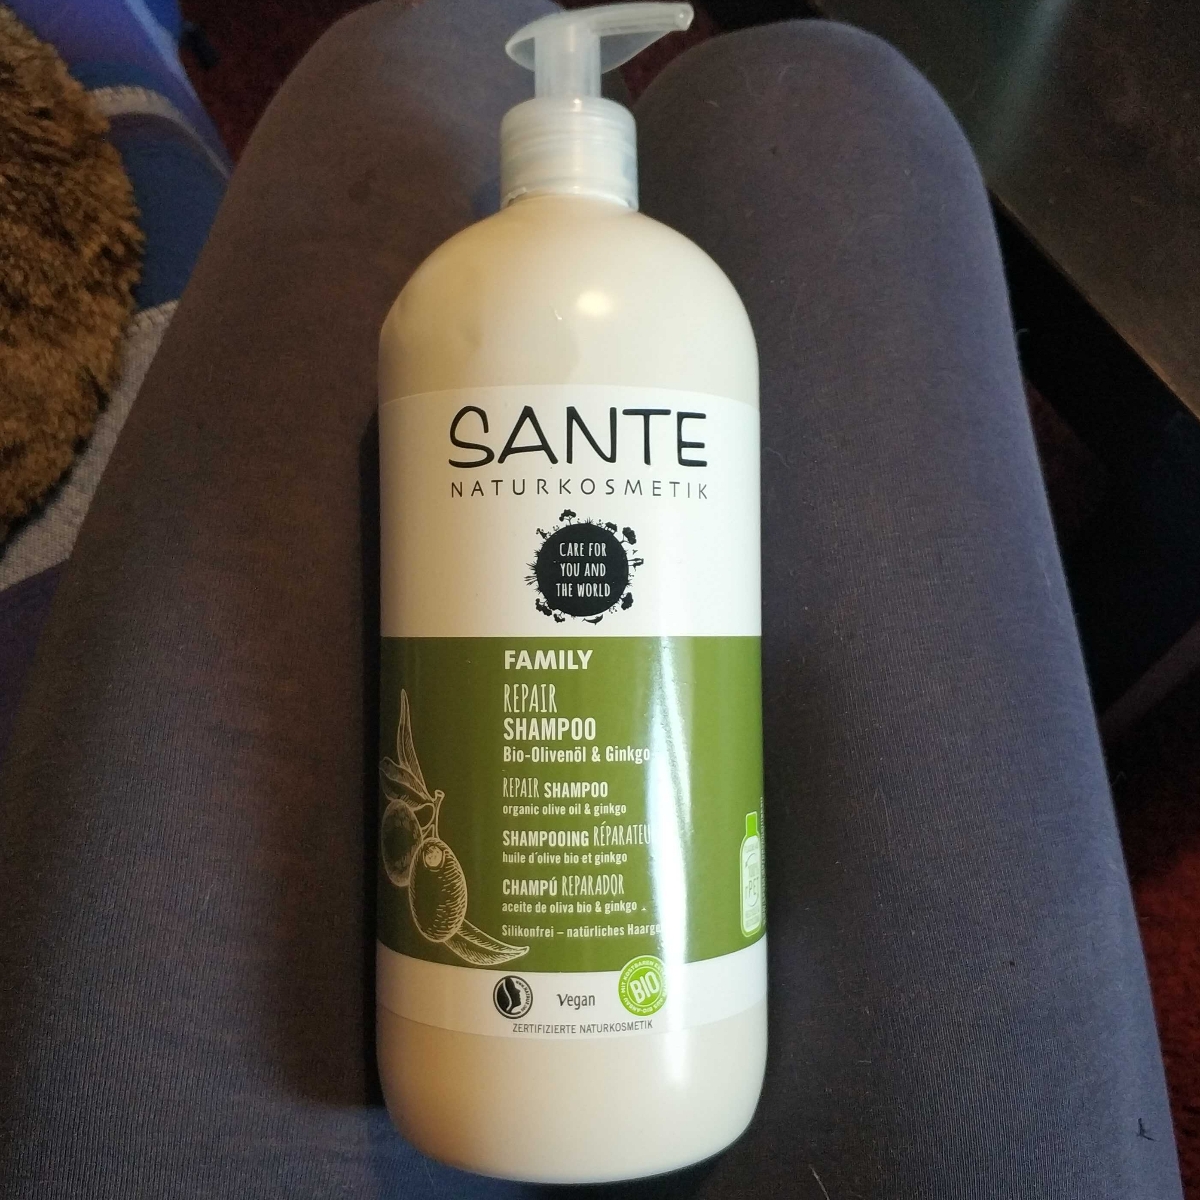 Sante Naturkosmetik Repair Shampoo Review | abillion